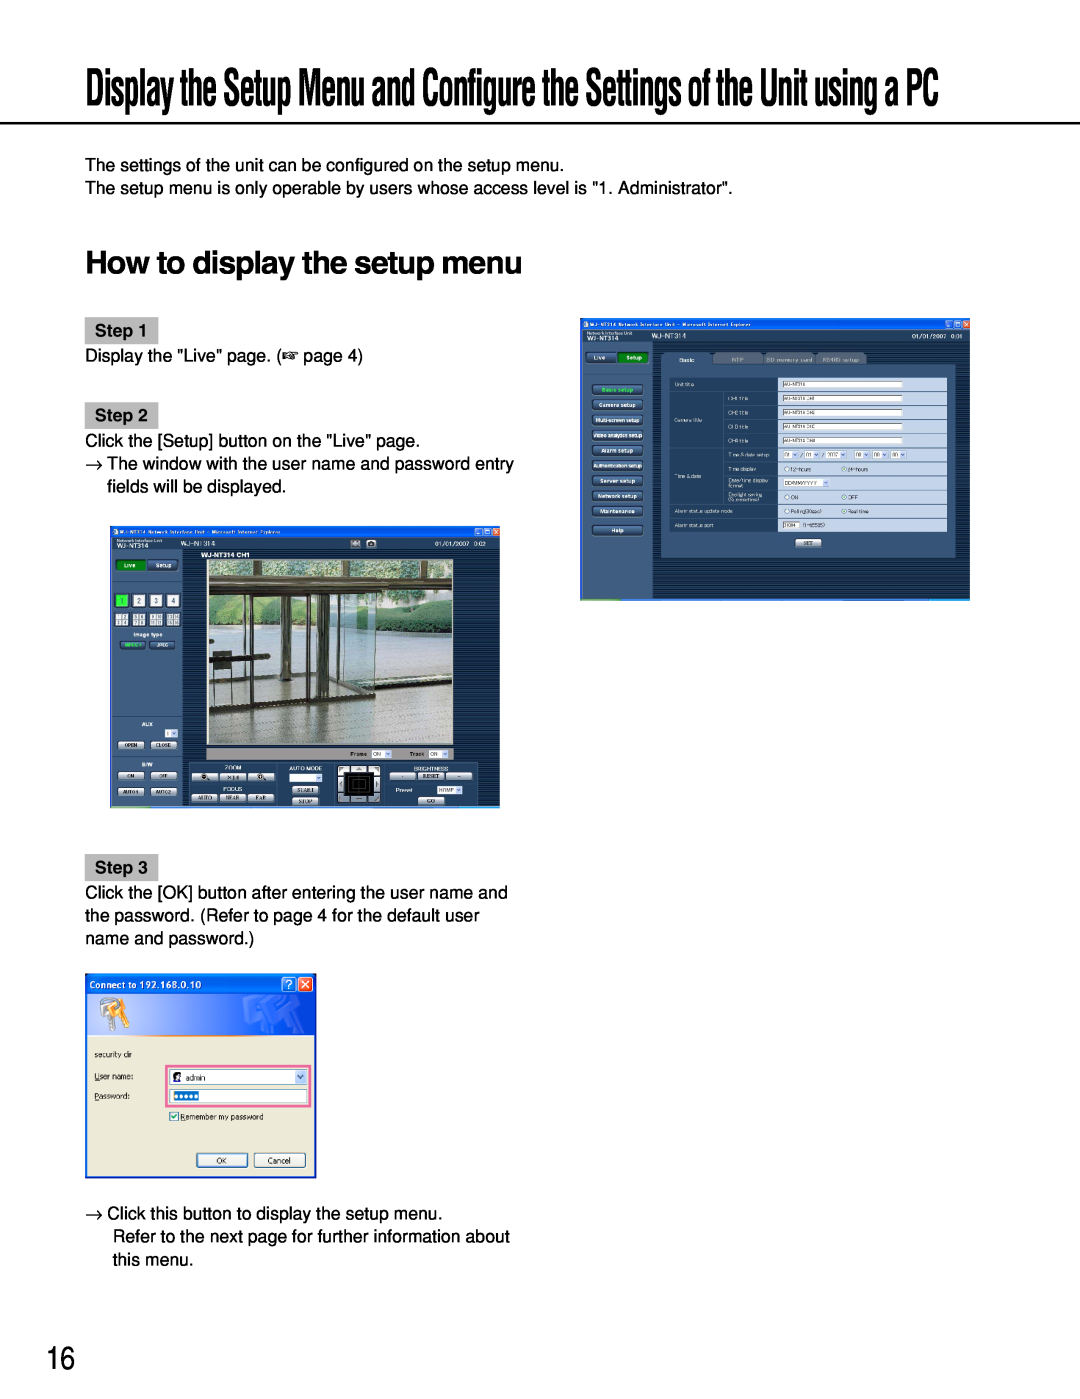 Panasonic WJ-NT314 manual How to display the setup menu, Step 